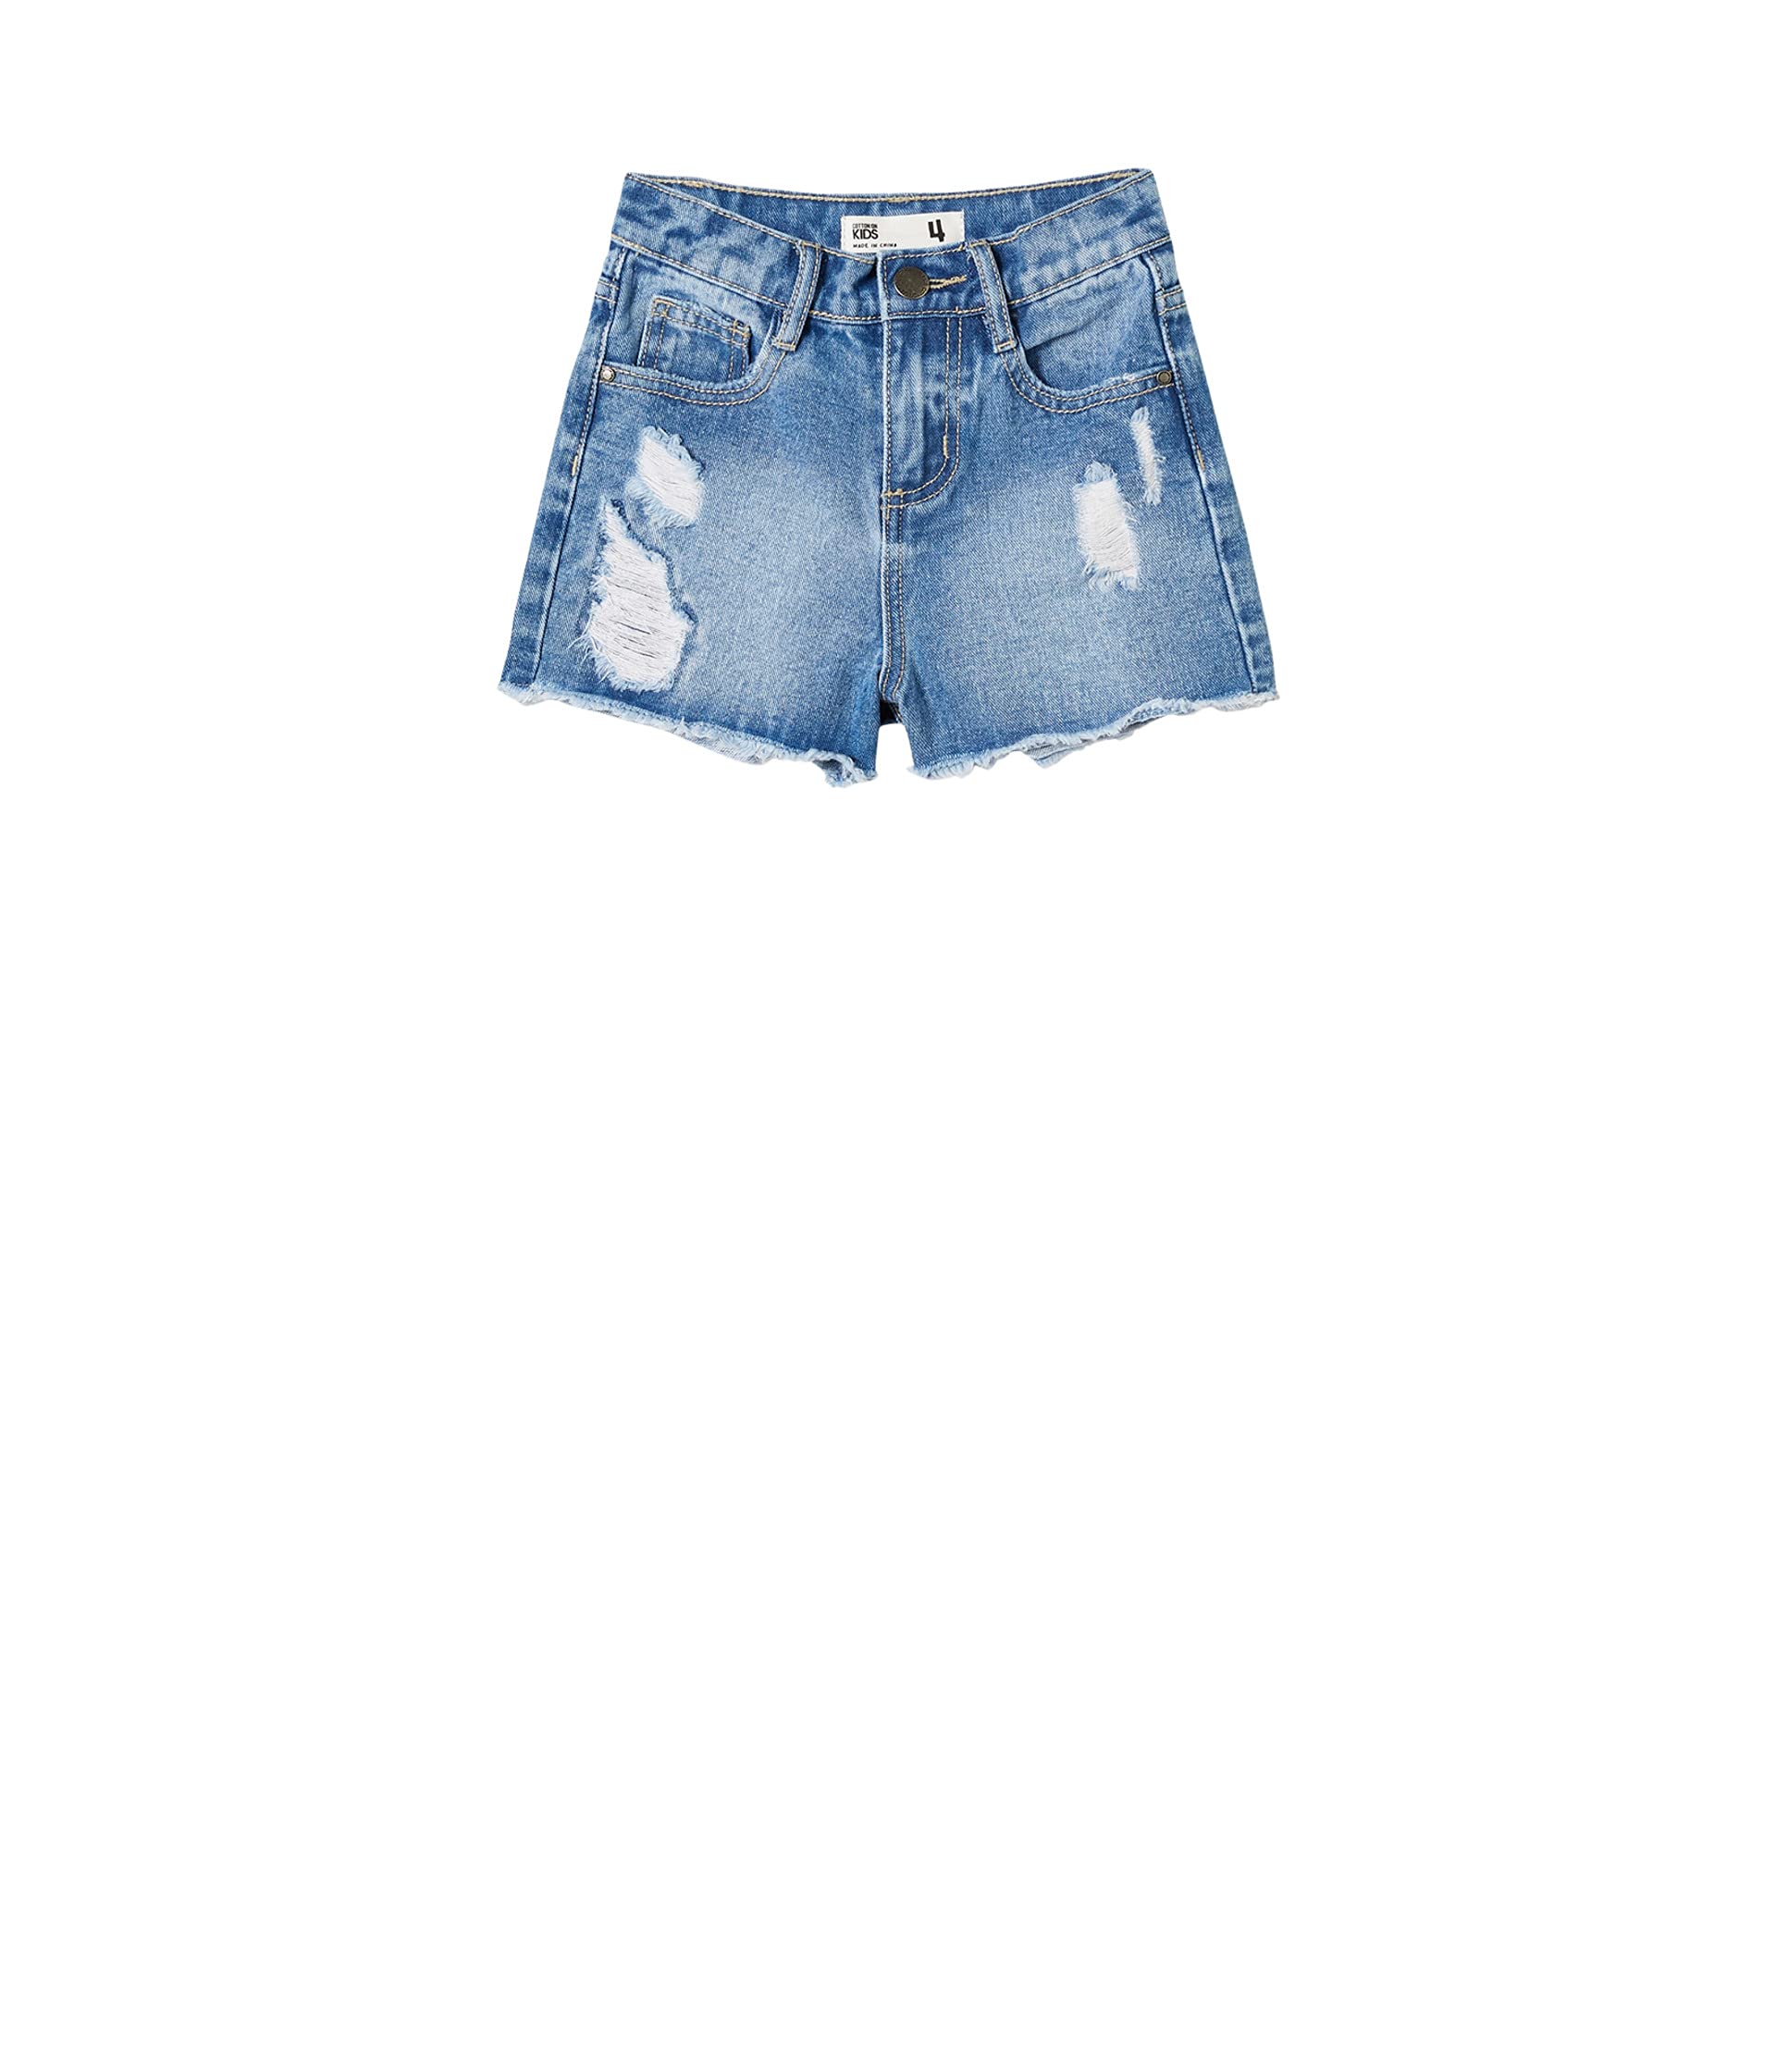 Шорты COTTON ON, Sunny Denim Shorts джинсовые шорты sunny cotton on цвет weekend wash rips